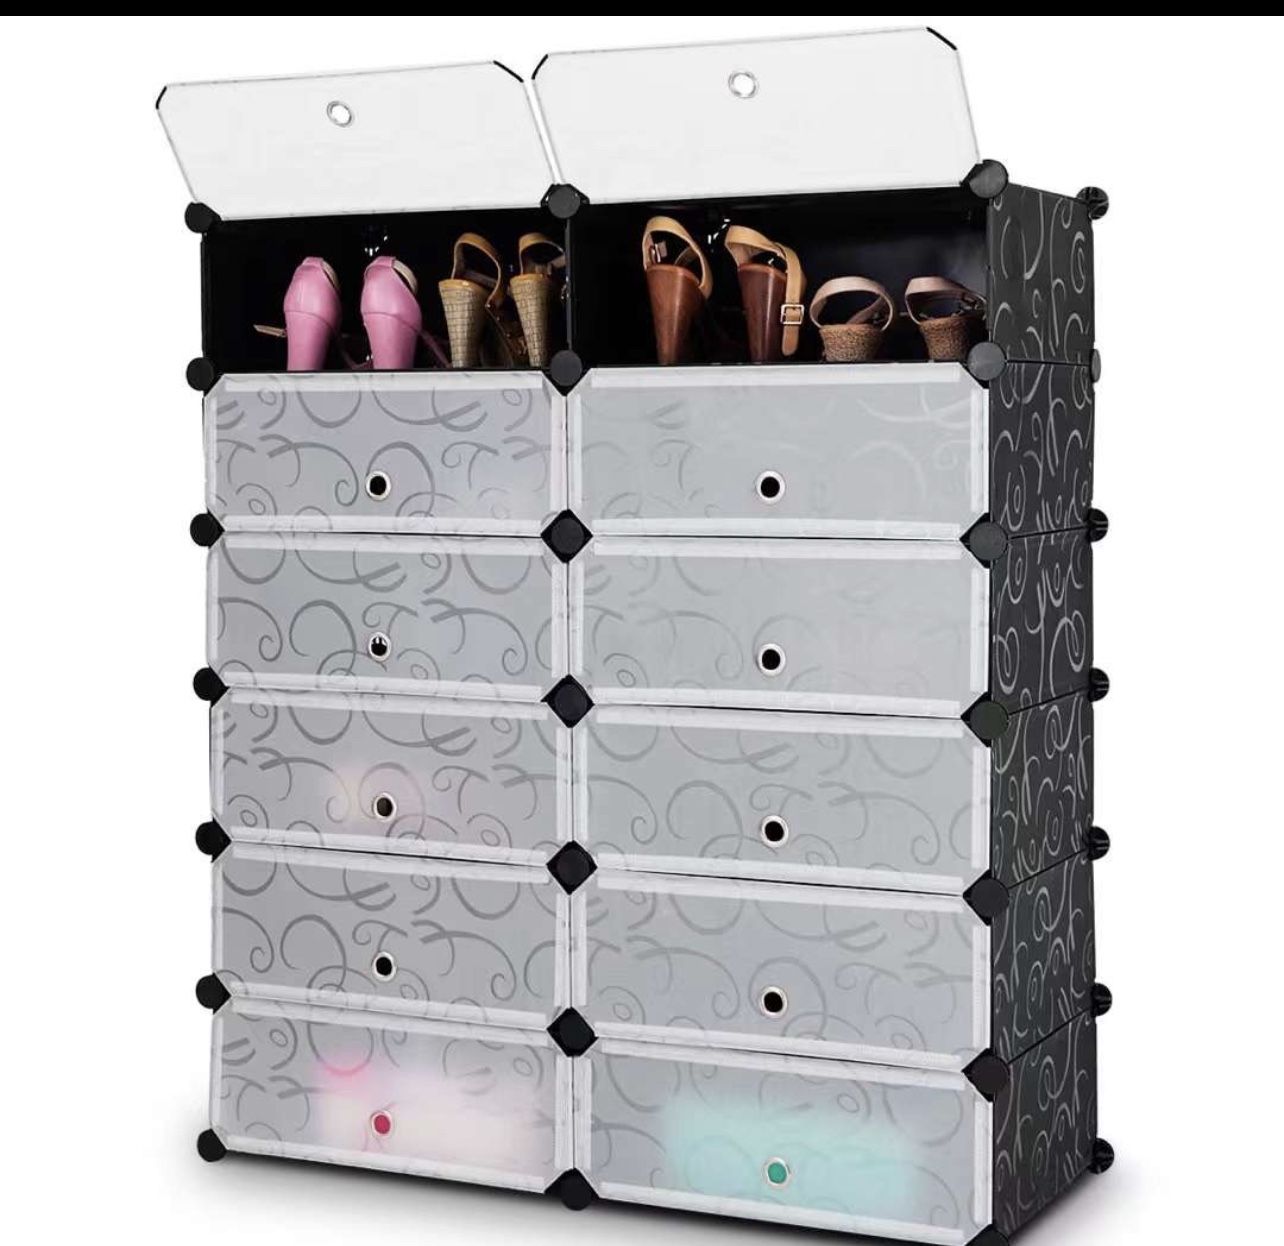 37.5” Shoe Rack Organizer, 6-Tier Plastic Shoe Storage Cabinet for 24 pairs, Sturdy & Stackable Modular Shoe Shelf Rack for Closet Entryway, Black